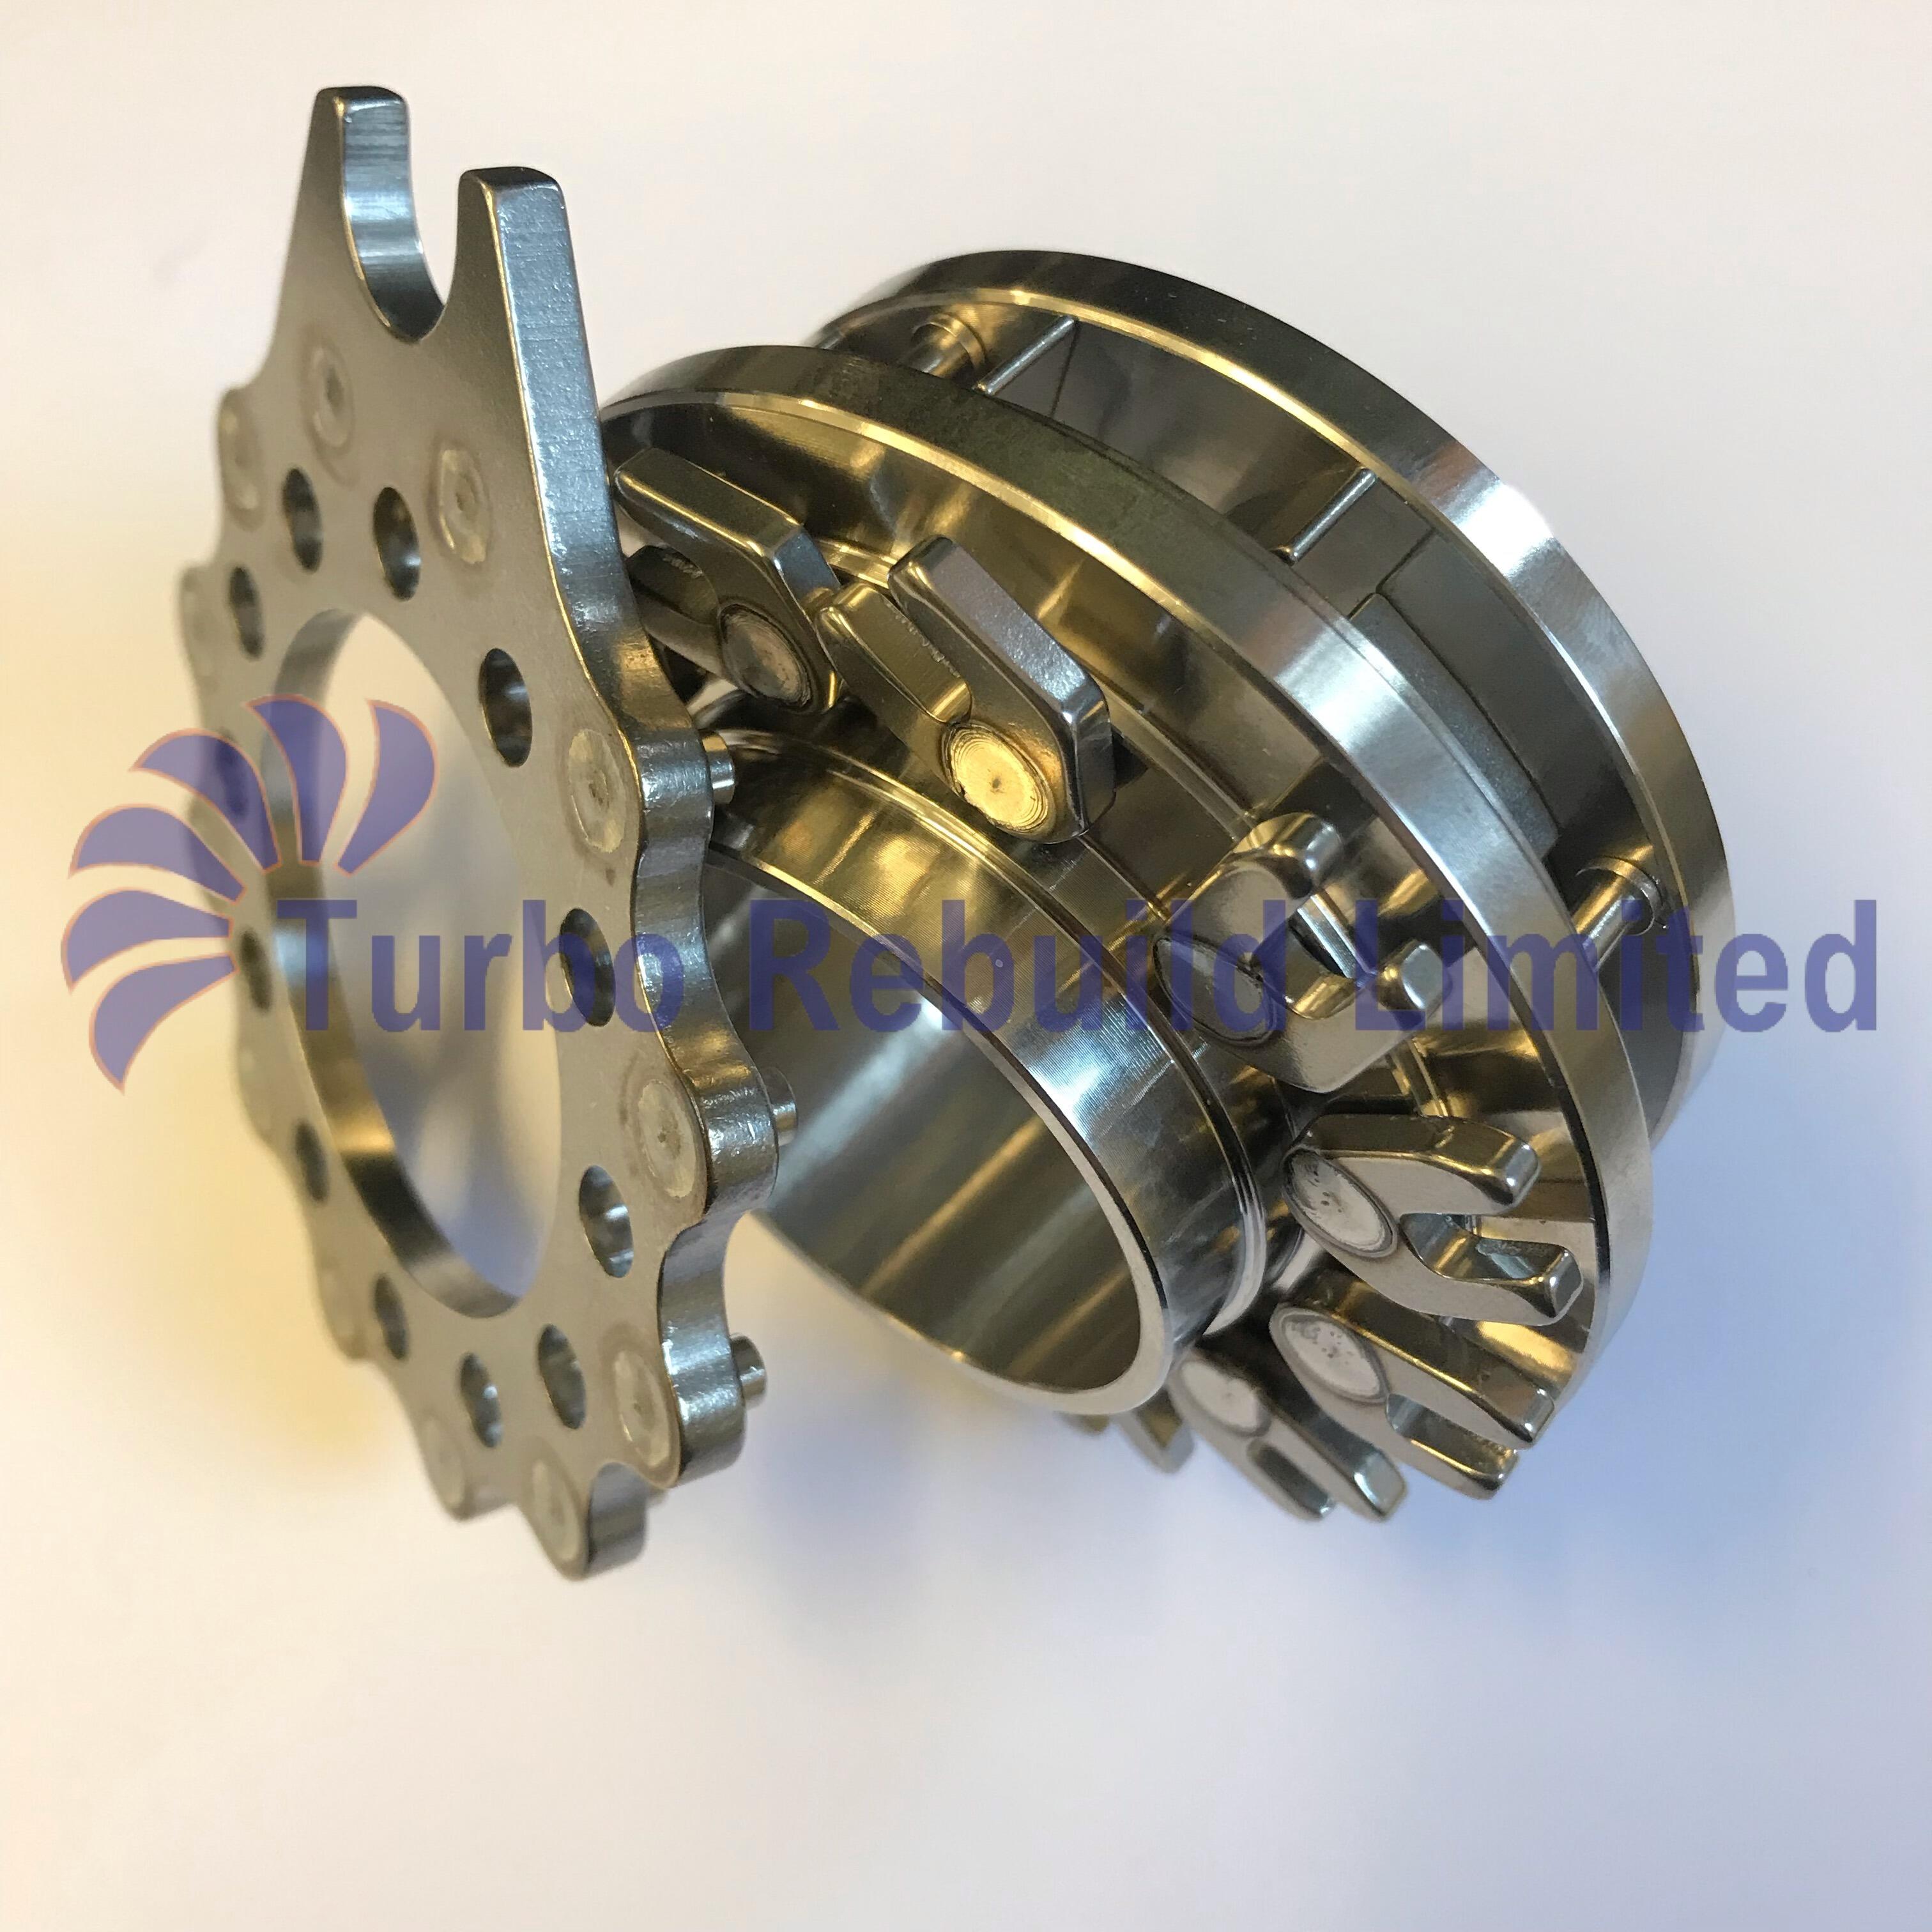 T- TPL65 Turbo Nozzle Ring Assembly For ABB Aftermarket Turbocharger Kits